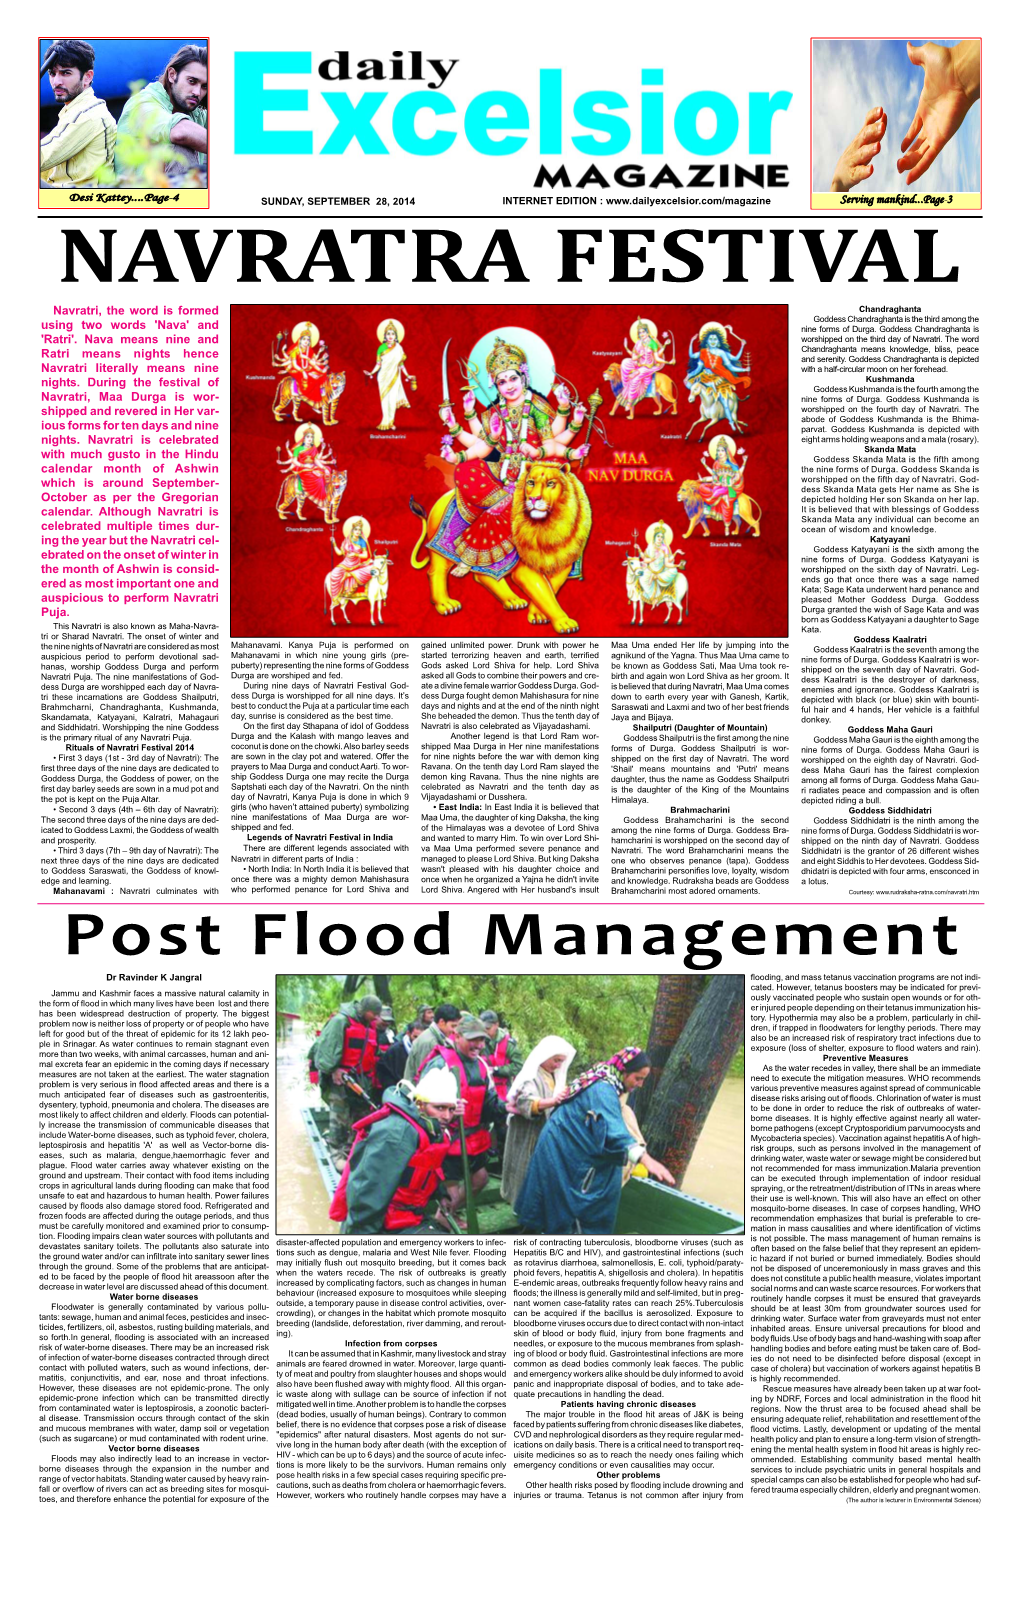 Post Flood Management Dr Ravinder K Jangral Flooding, and Mass Tetanus Vaccination Programs Are Not Indi- Cated